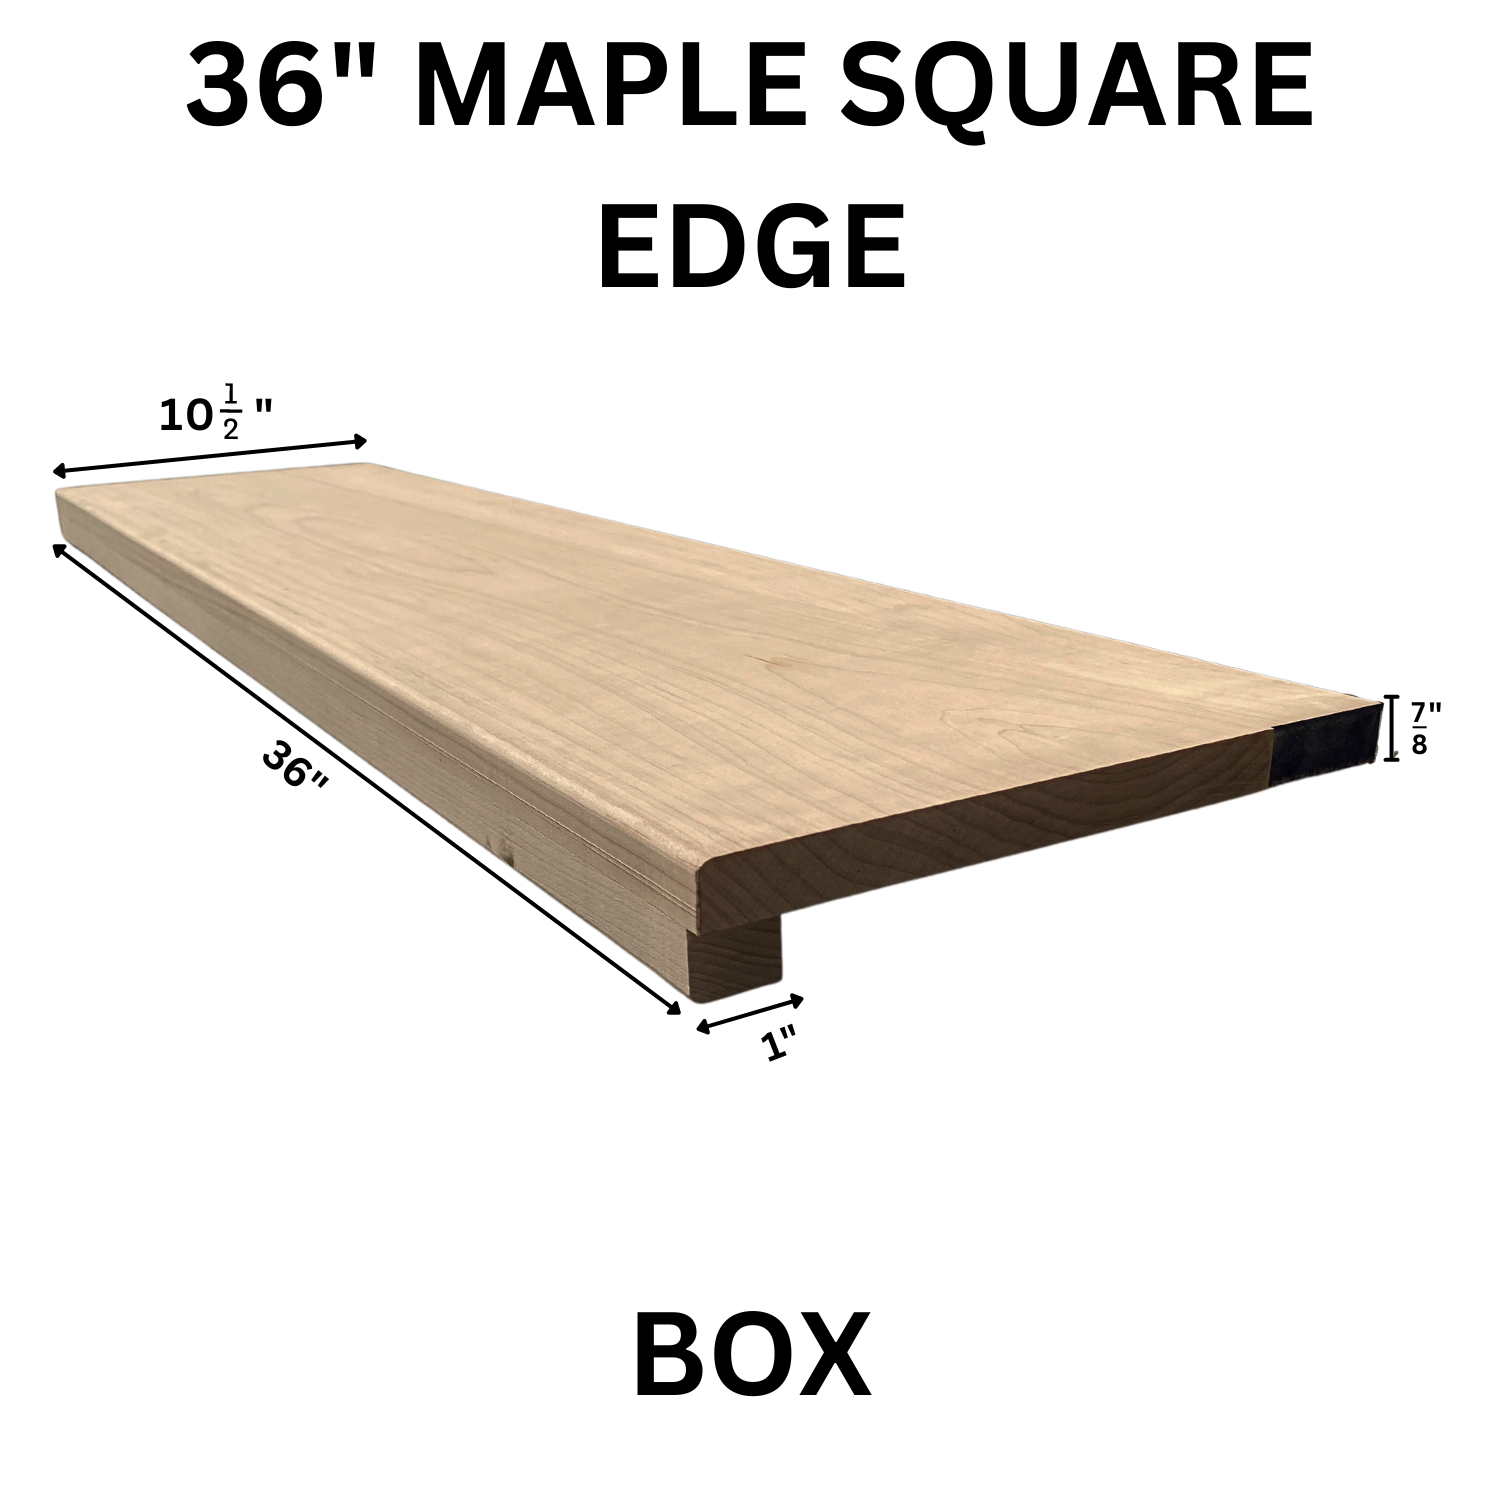 Maple Square Edge Tread 36 Box MSET-36